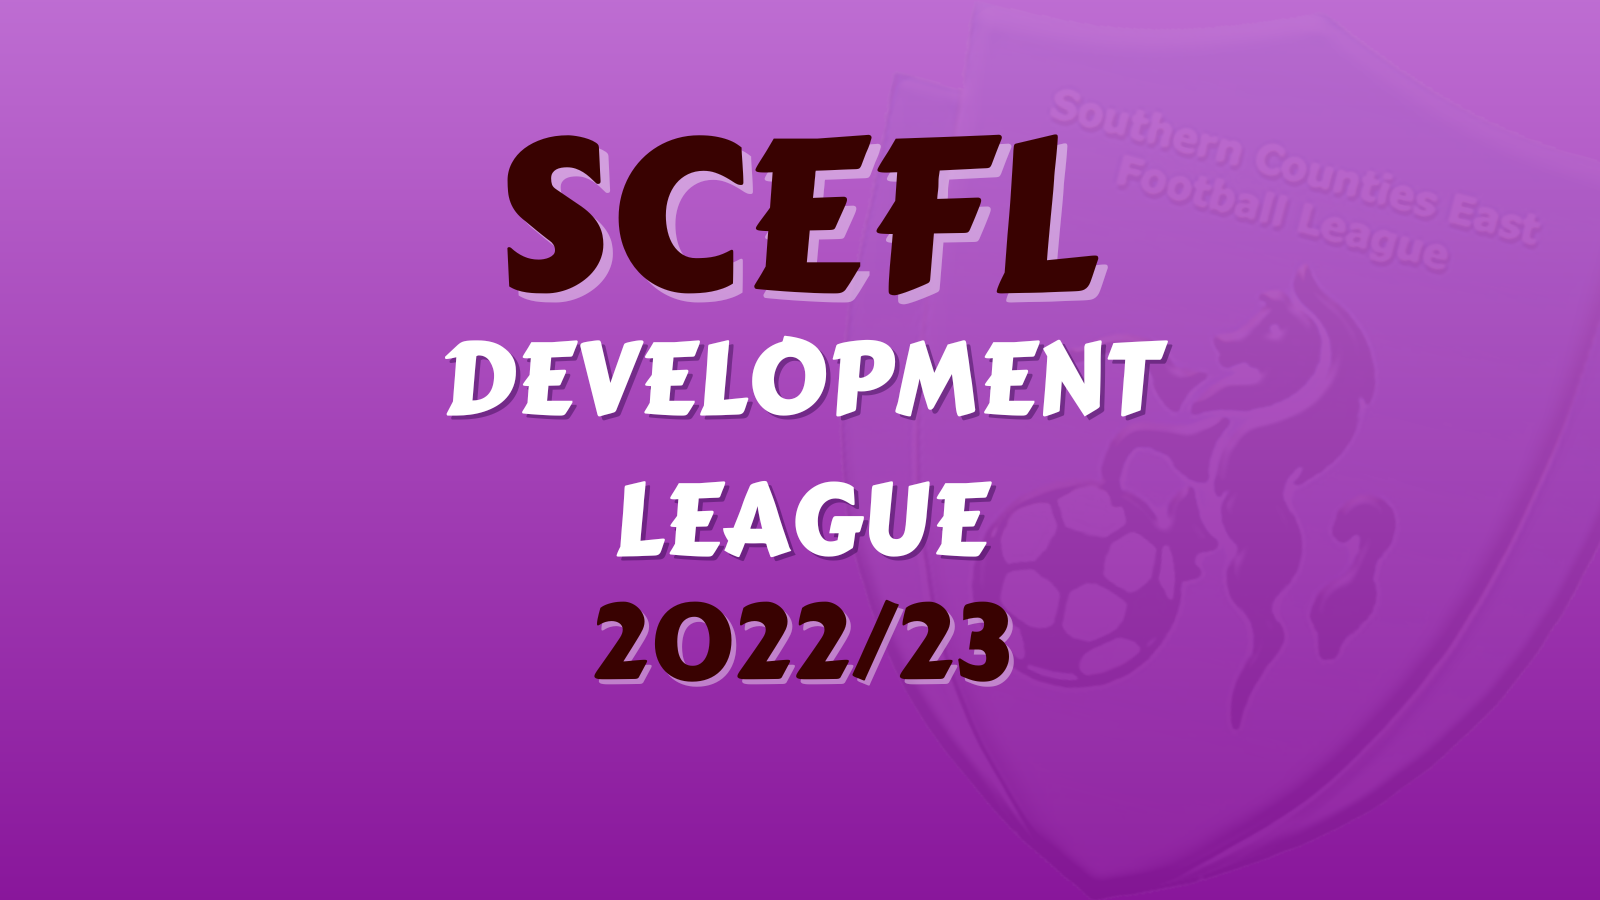 Development League